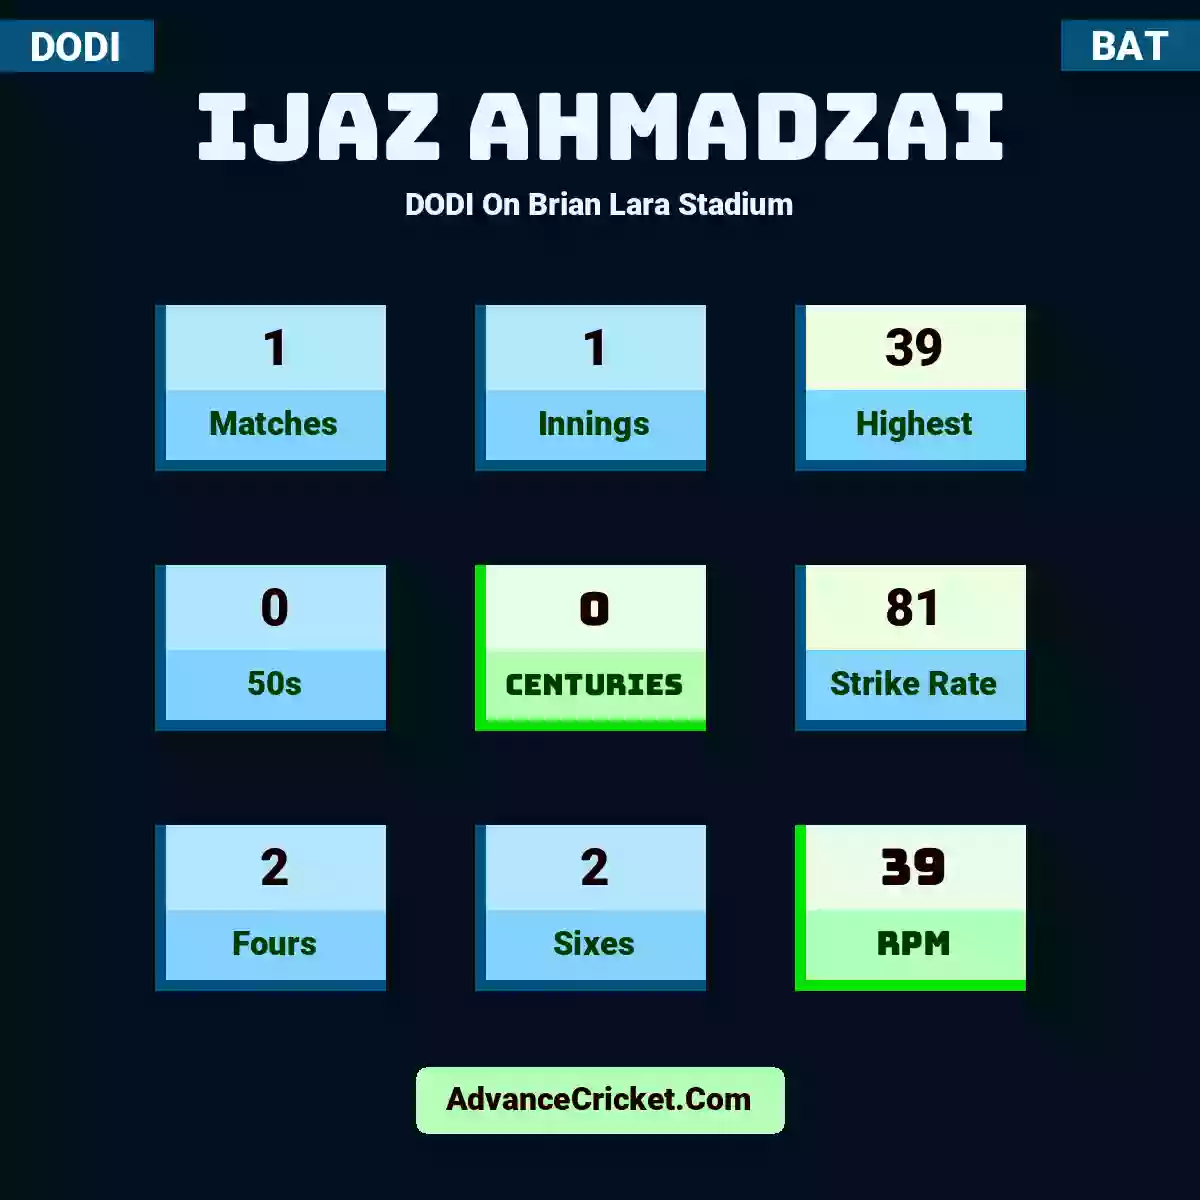 Ijaz Ahmadzai DODI  On Brian Lara Stadium, Ijaz Ahmadzai played 1 matches, scored 39 runs as highest, 0 half-centuries, and 0 centuries, with a strike rate of 81. I.Ahmadzai hit 2 fours and 2 sixes, with an RPM of 39.